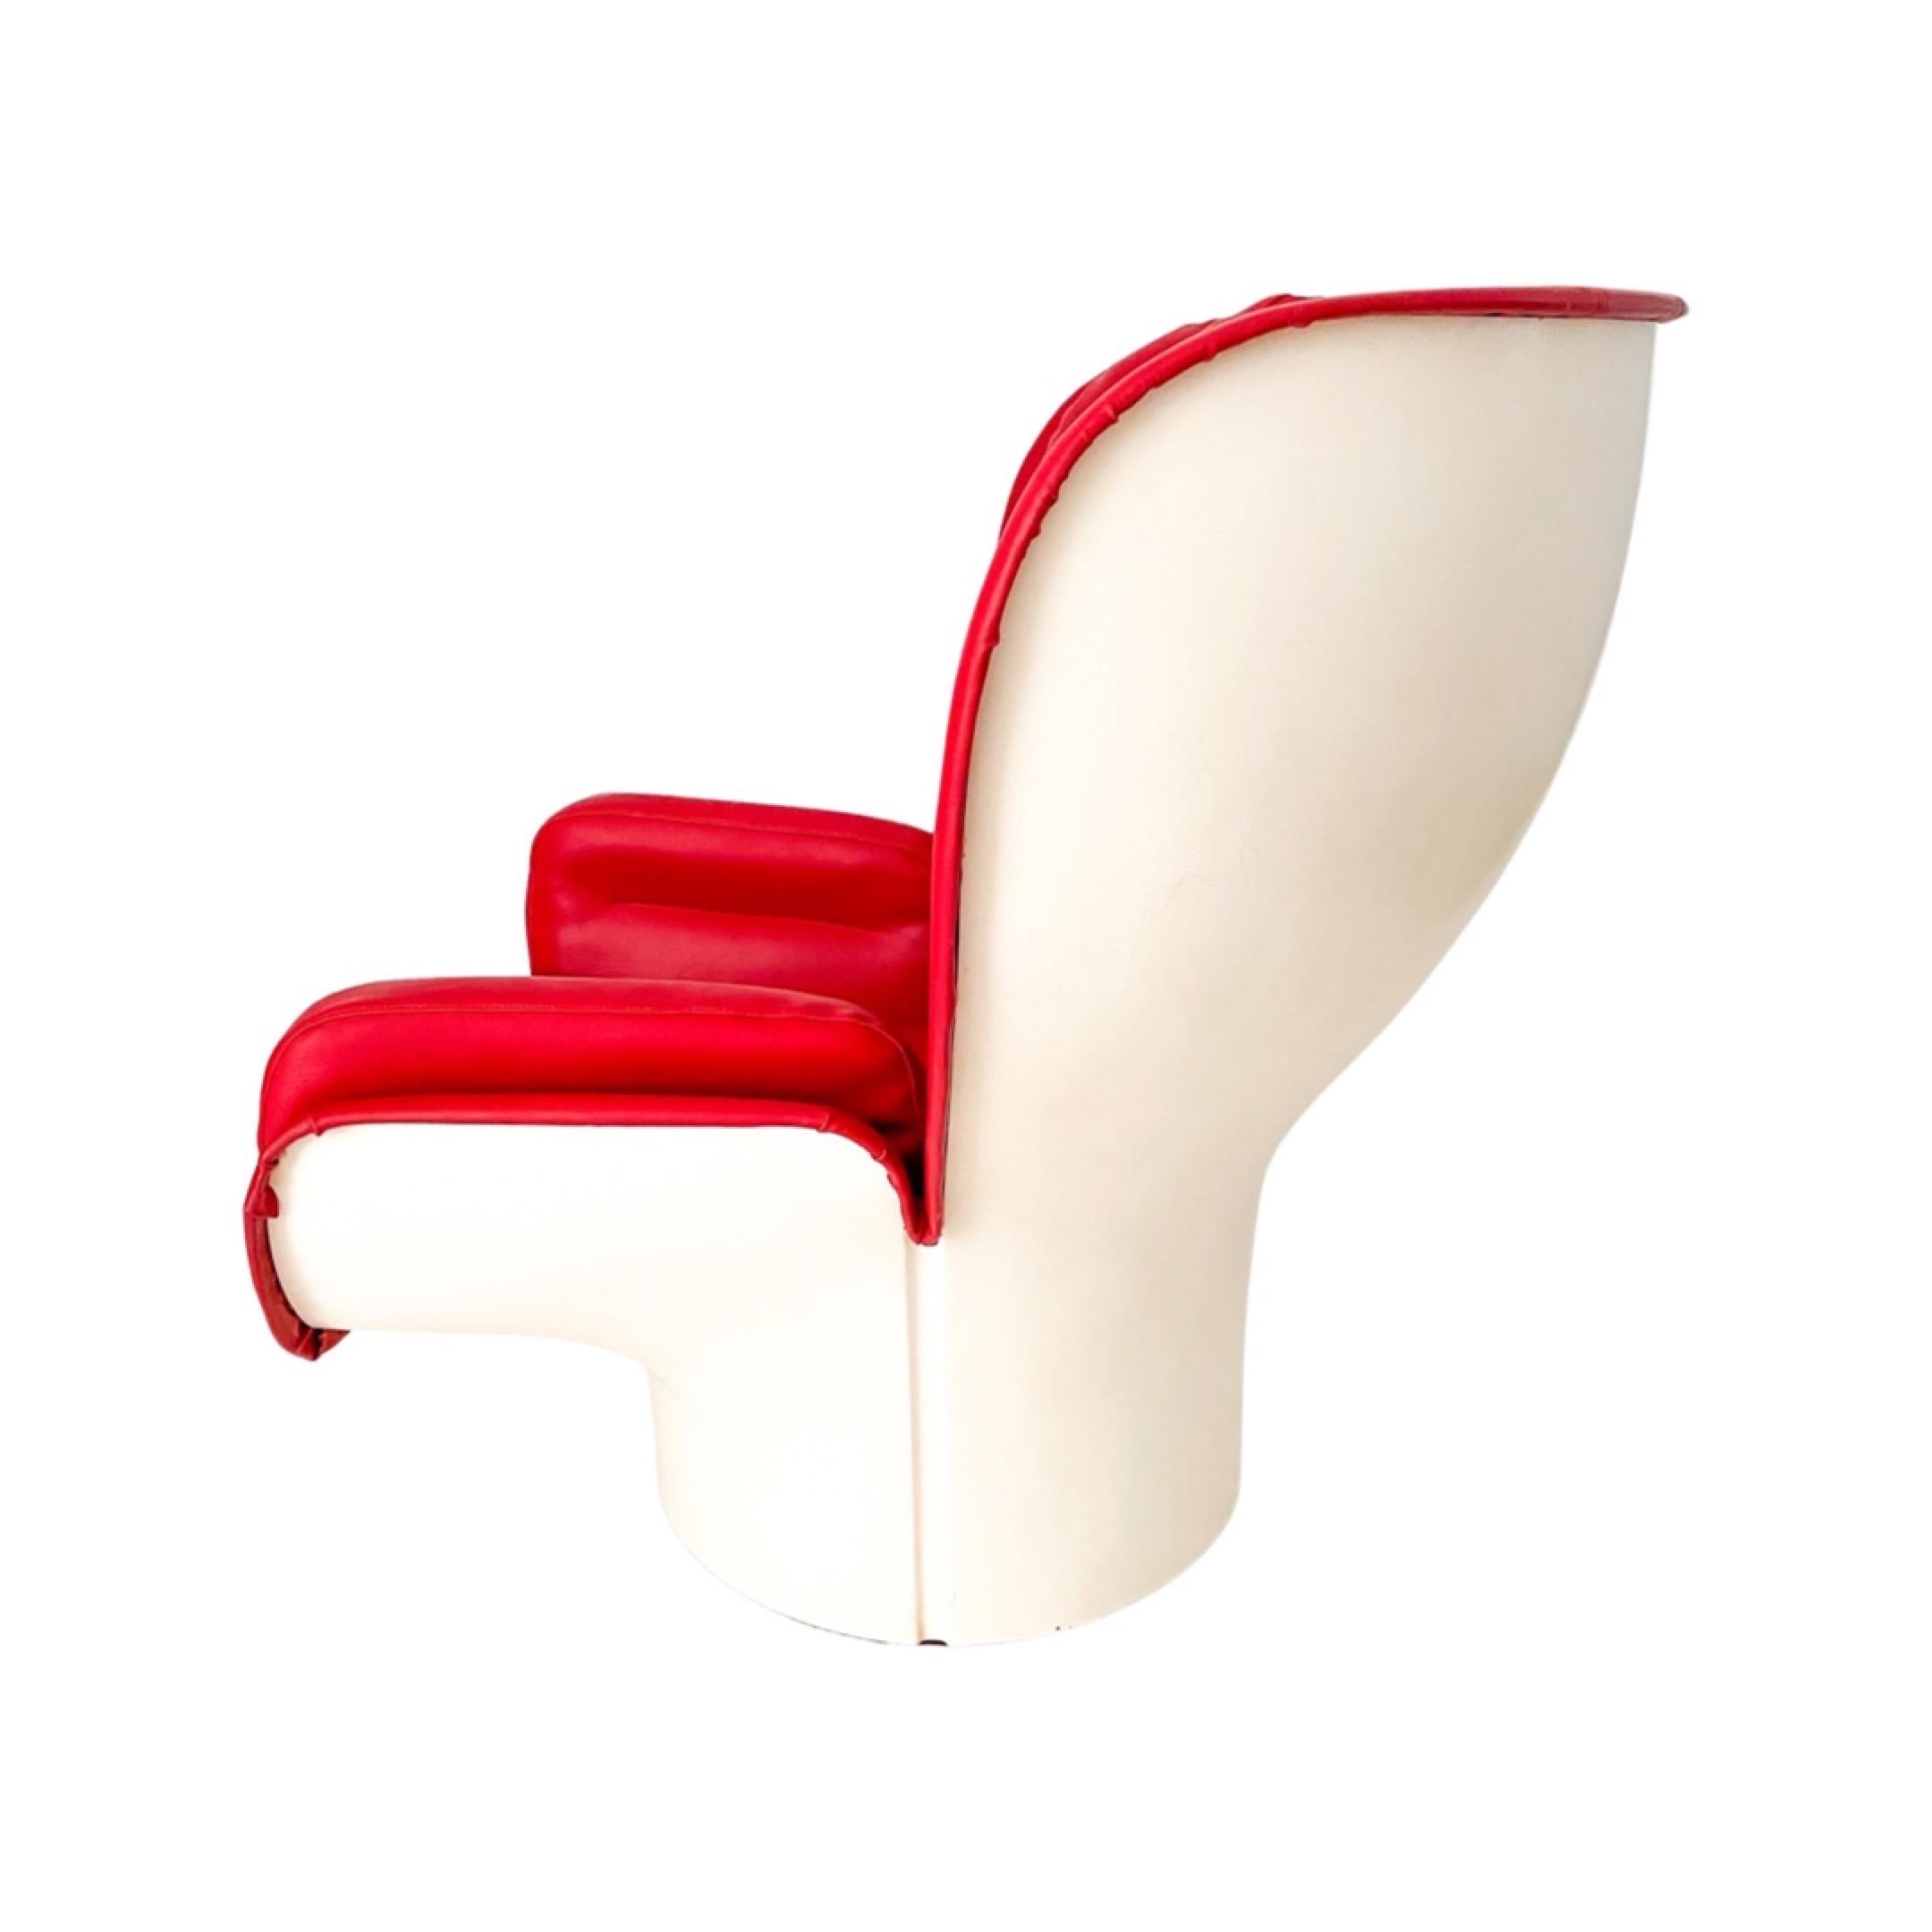 Mid-20th Century Elda Chair by Joe Colombo for Comfort C. 1960's